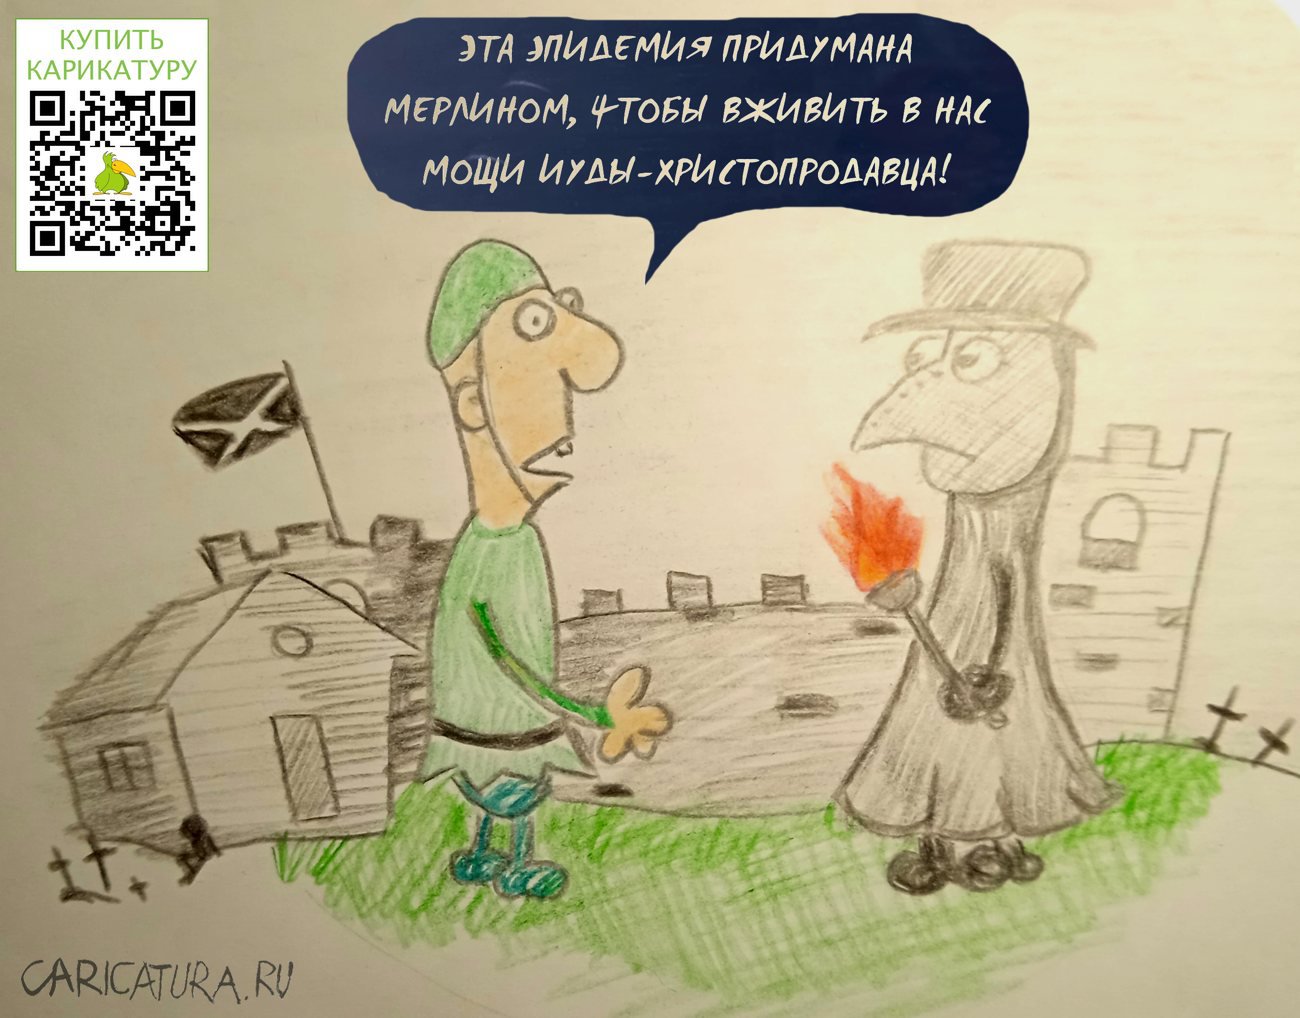 Карикатура "Выдумки", Константин Погодаев